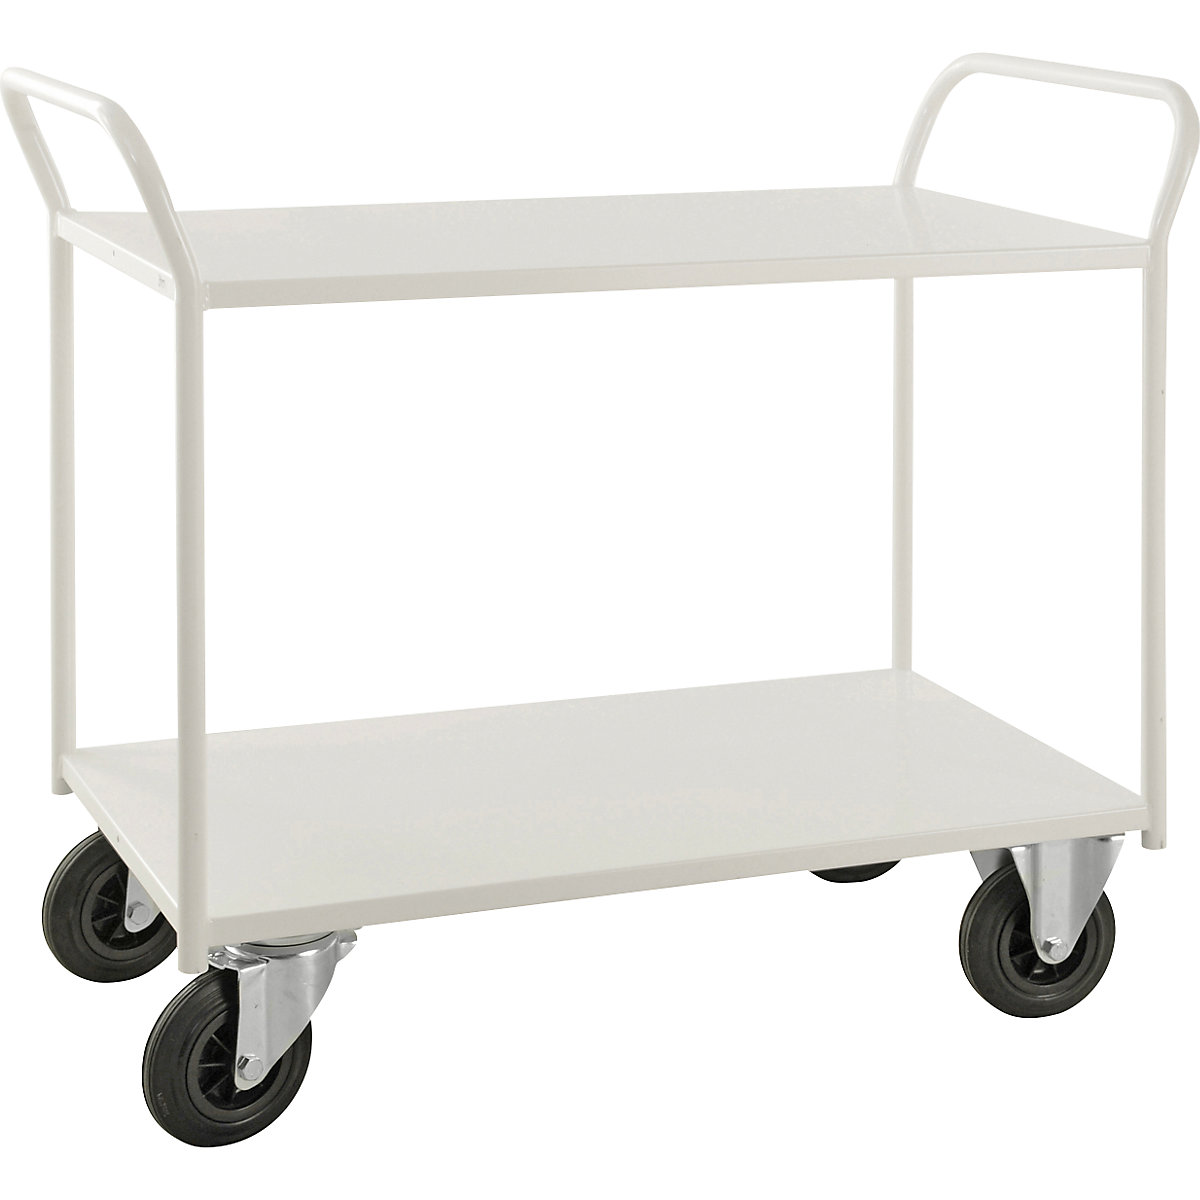 KM41 table trolley – Kongamek, 2 shelves, LxWxH 1080 x 450 x 975 mm, white, 2 swivel castors and 2 fixed castors, 5+ items-7